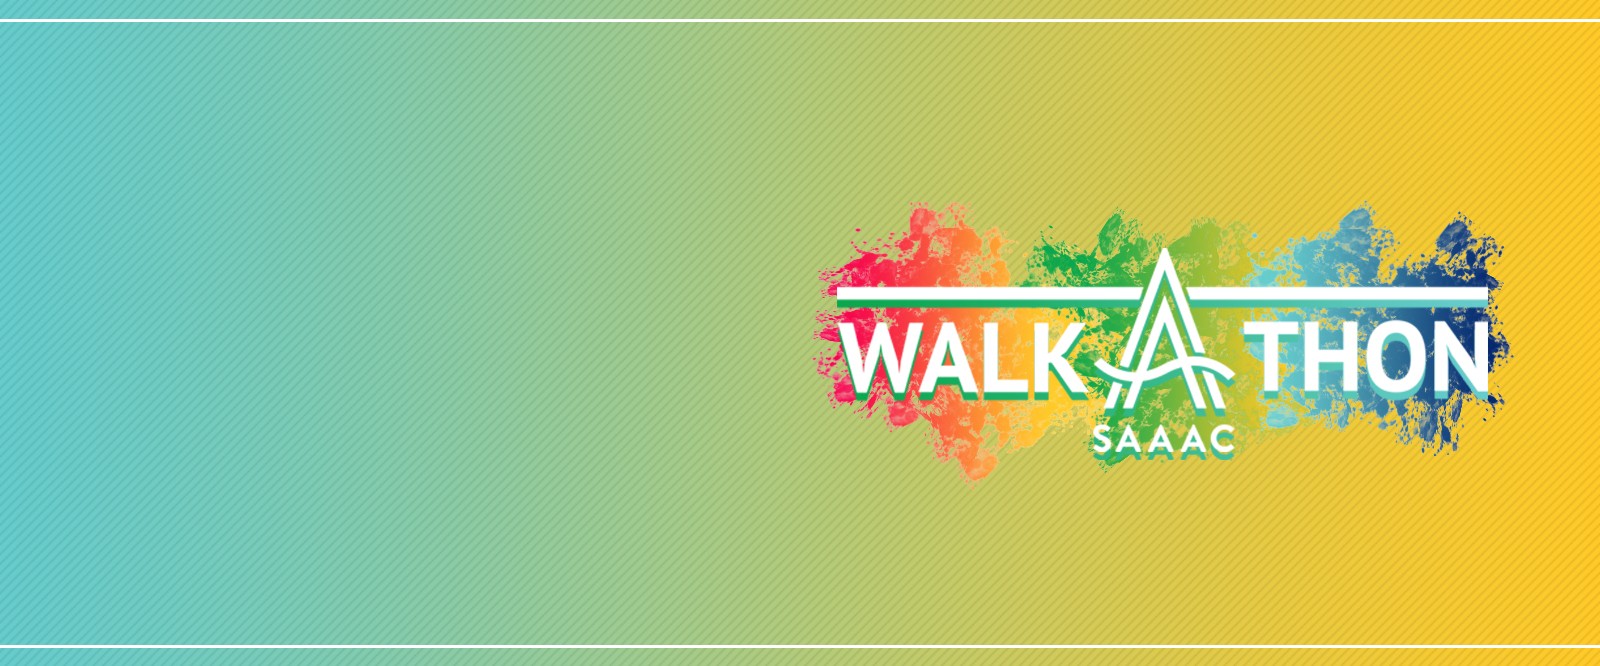 saaac walk-a-thon banner image